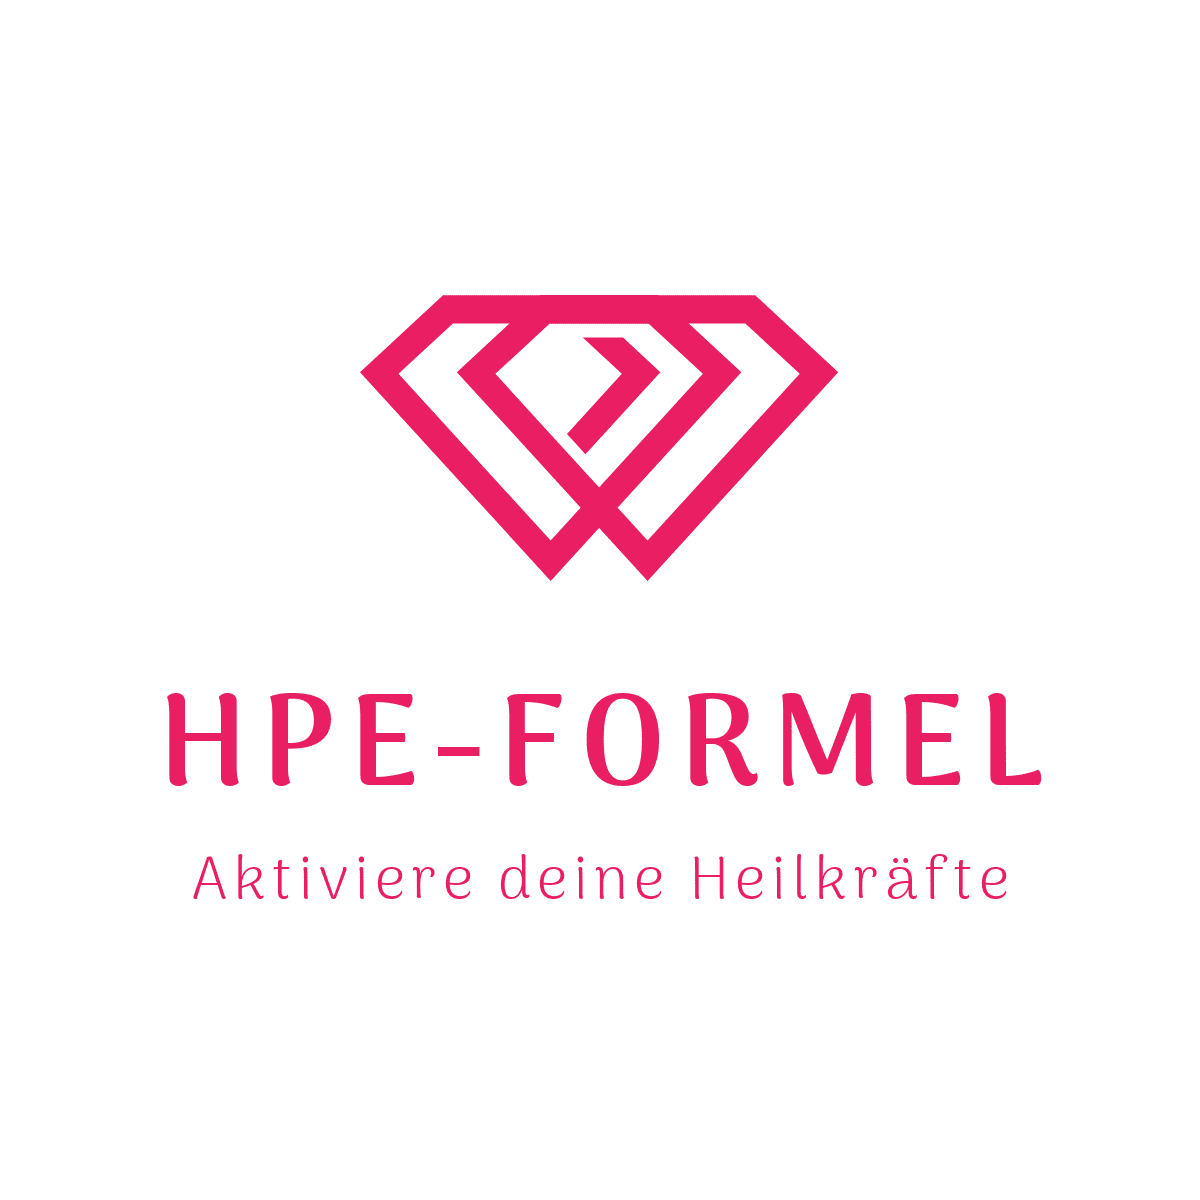 HPE-Formel Logo